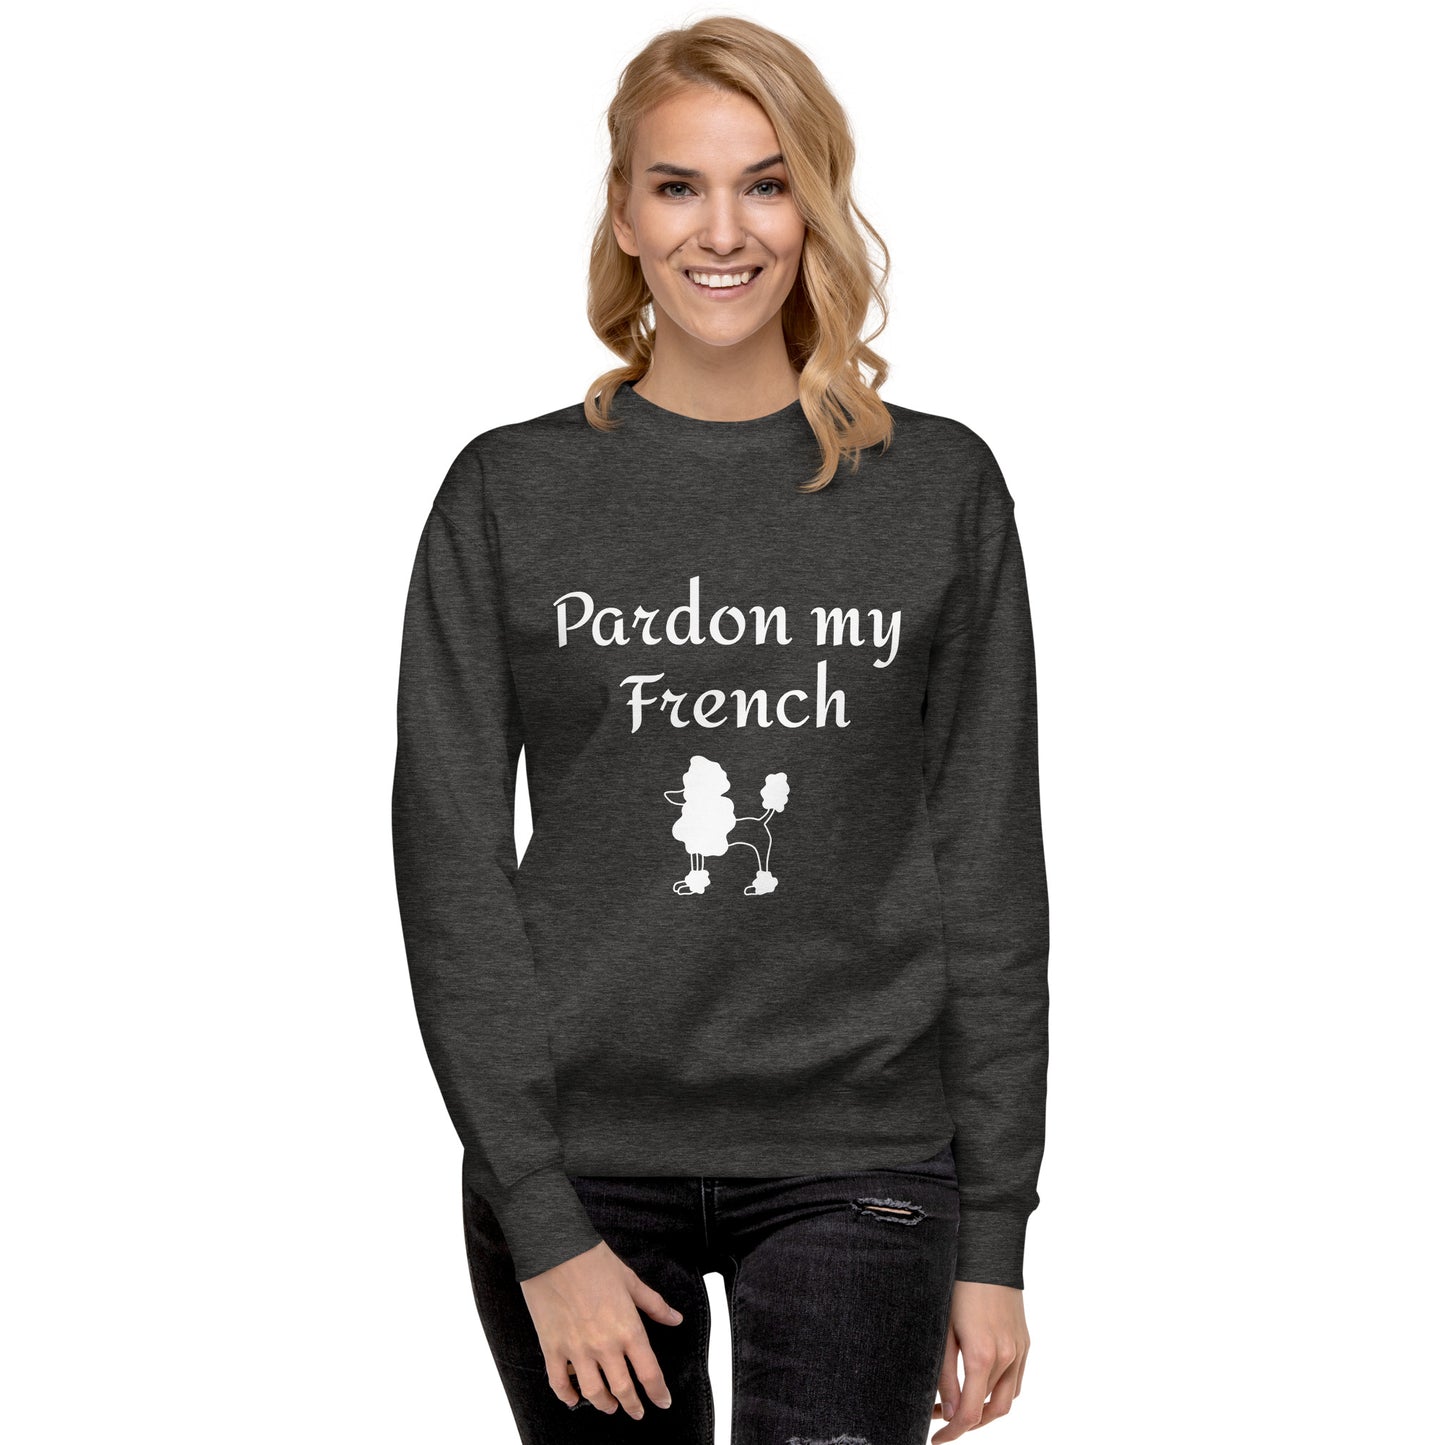 Pardon my French - Sweatshirt